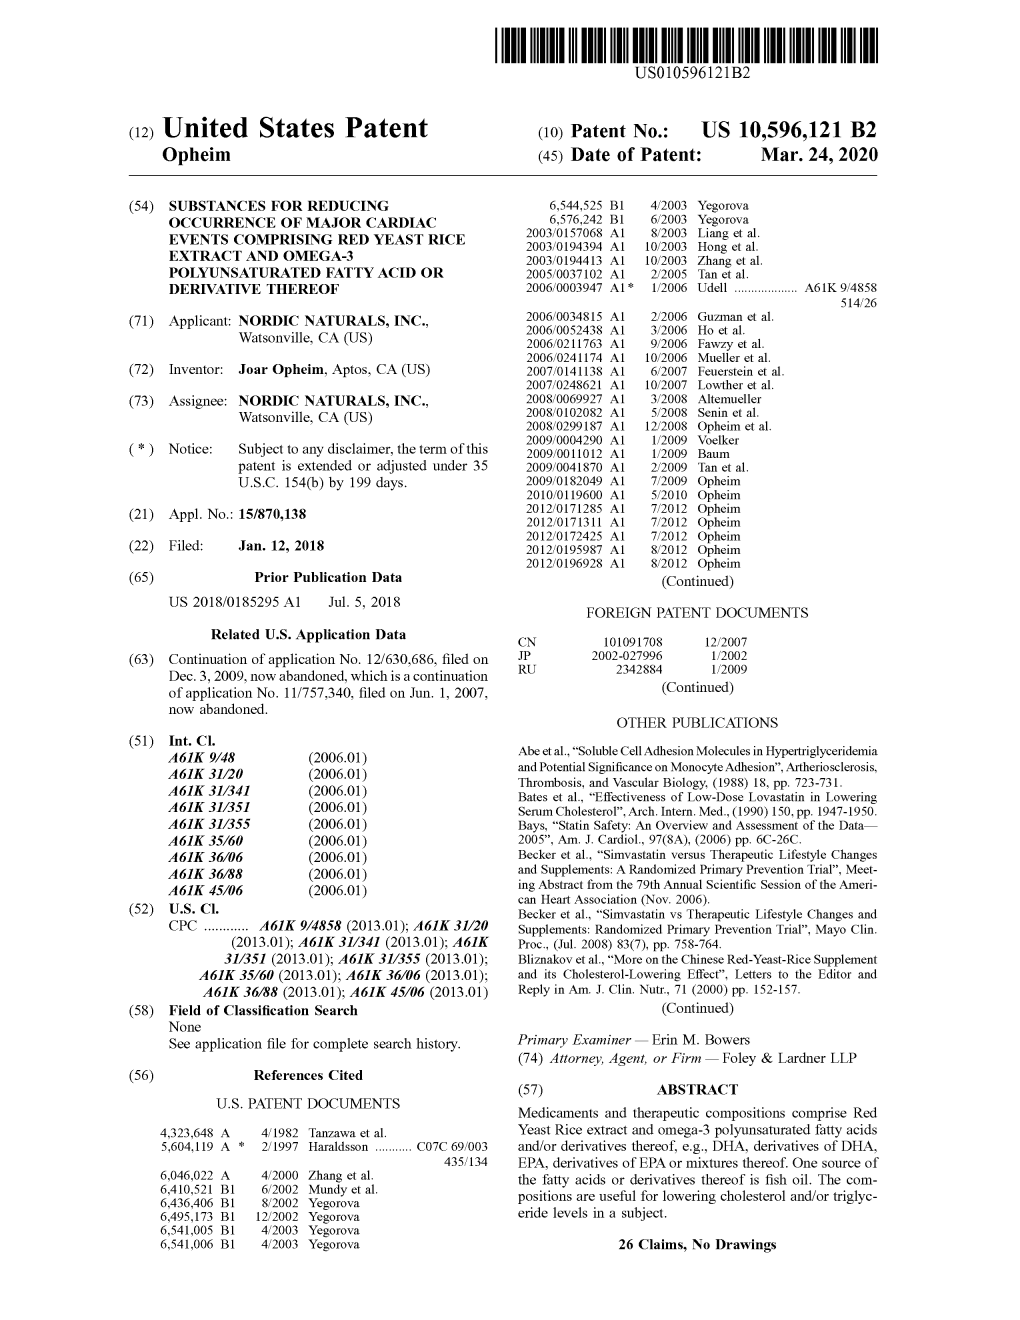 ( 12 ) United States Patent ( 10 ) Patent No.: US 10,596,121 B2 Opheim (45 ) Date of Patent : Mar